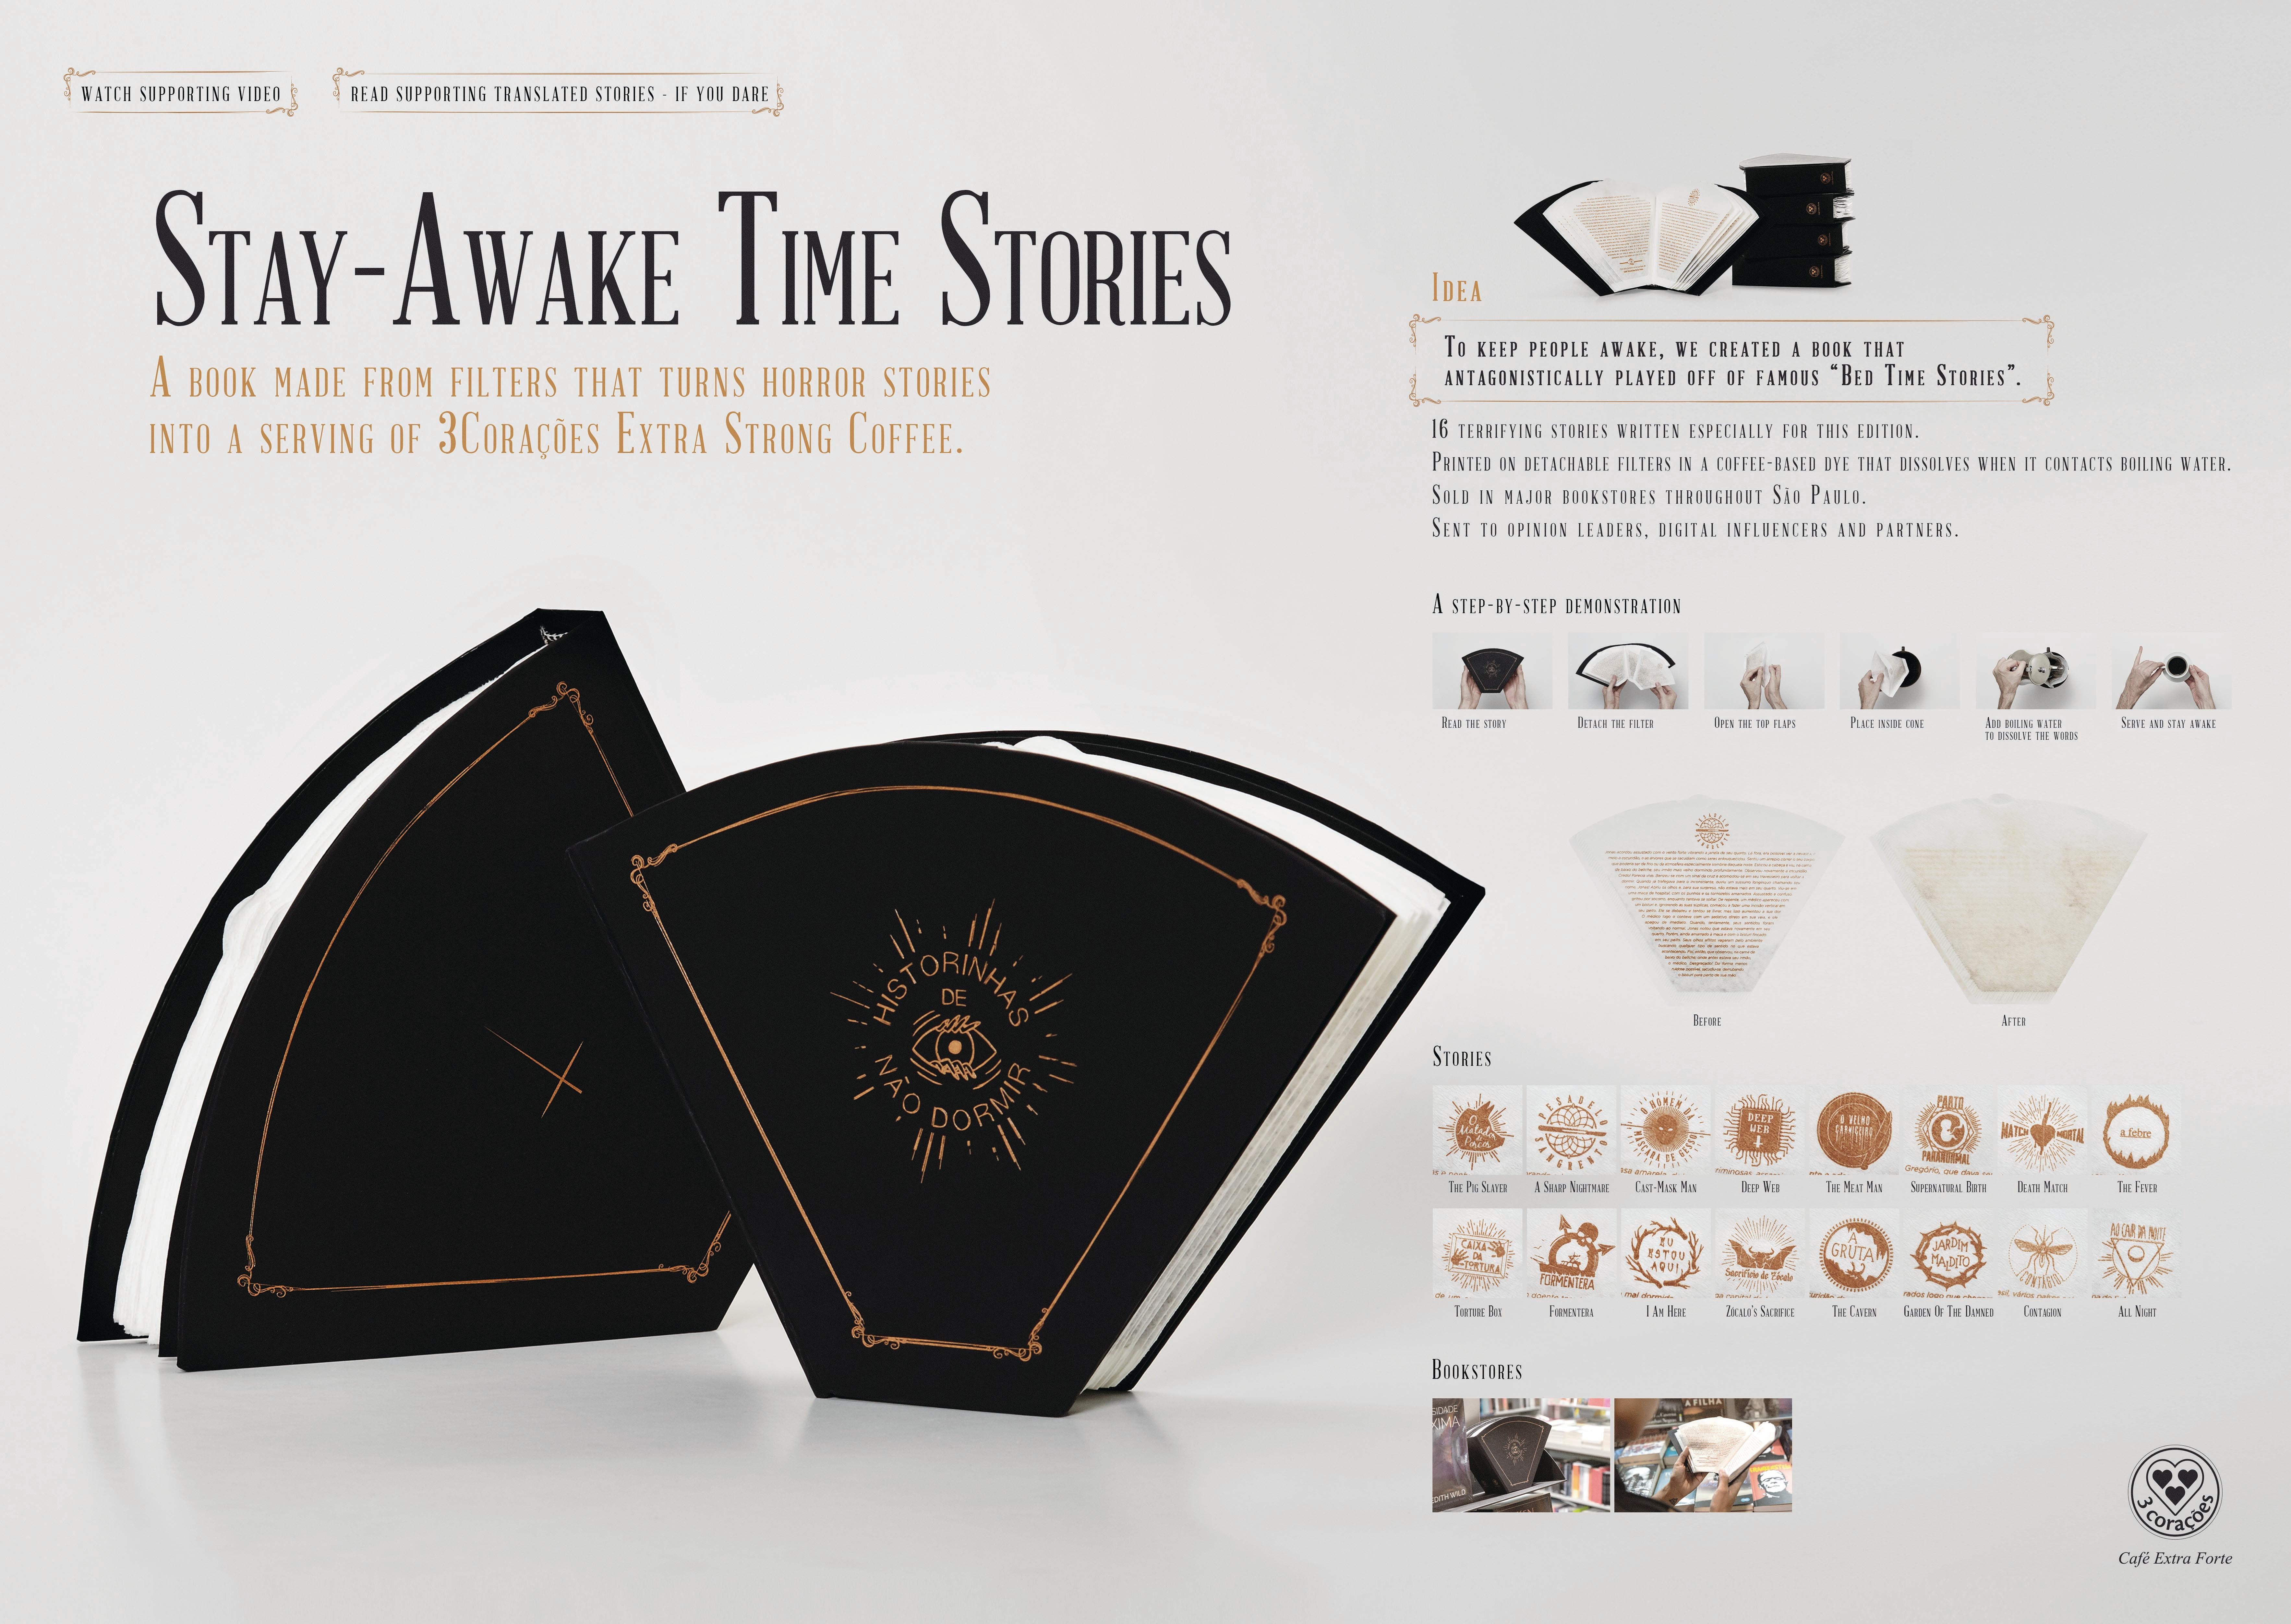 Stay-Awake Time Stories